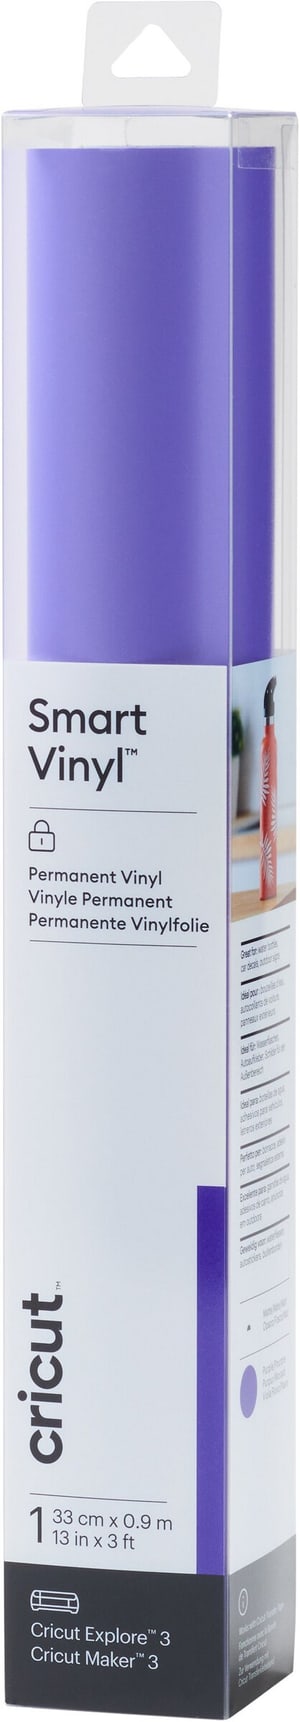 Vinylfolie Smart Matt Permanent 33 x 91 cm, Violett